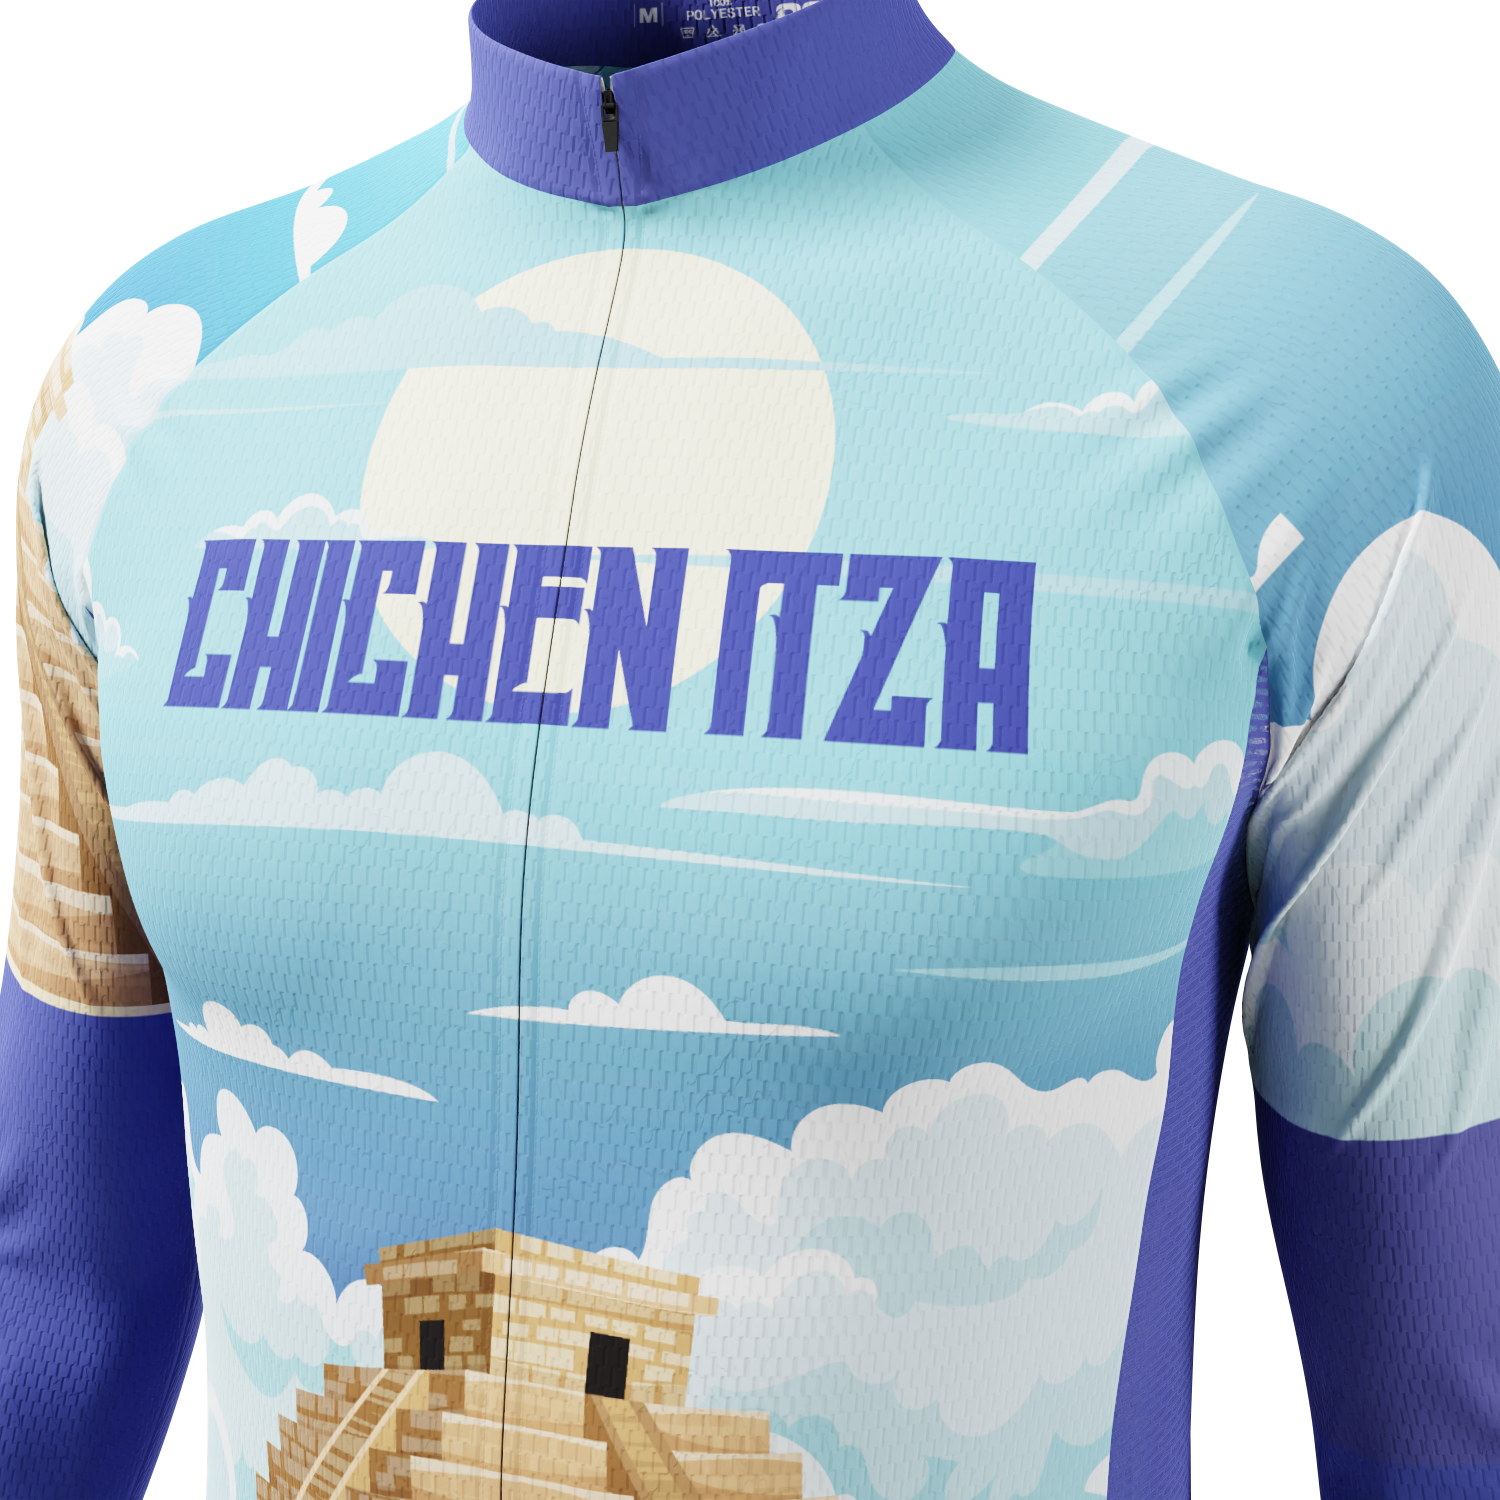 Men's Around The World - Chichen Itza Long Sleeve Cycling Jersey